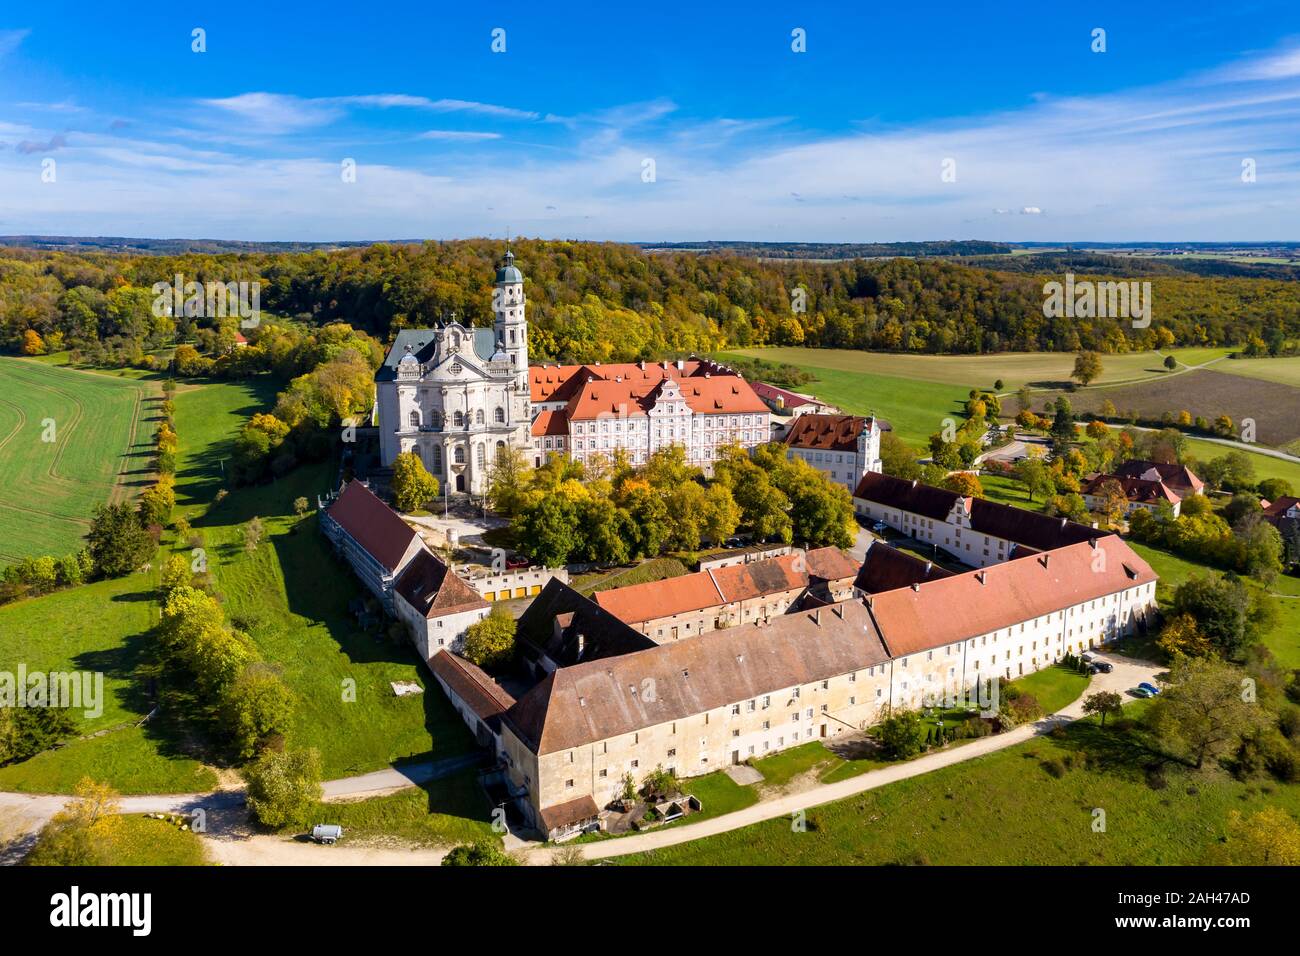 Alemania, Baden-Wuerttemberg, Neresheim, vista aérea del monasterio benedictino, Neresheim Abadía Foto de stock